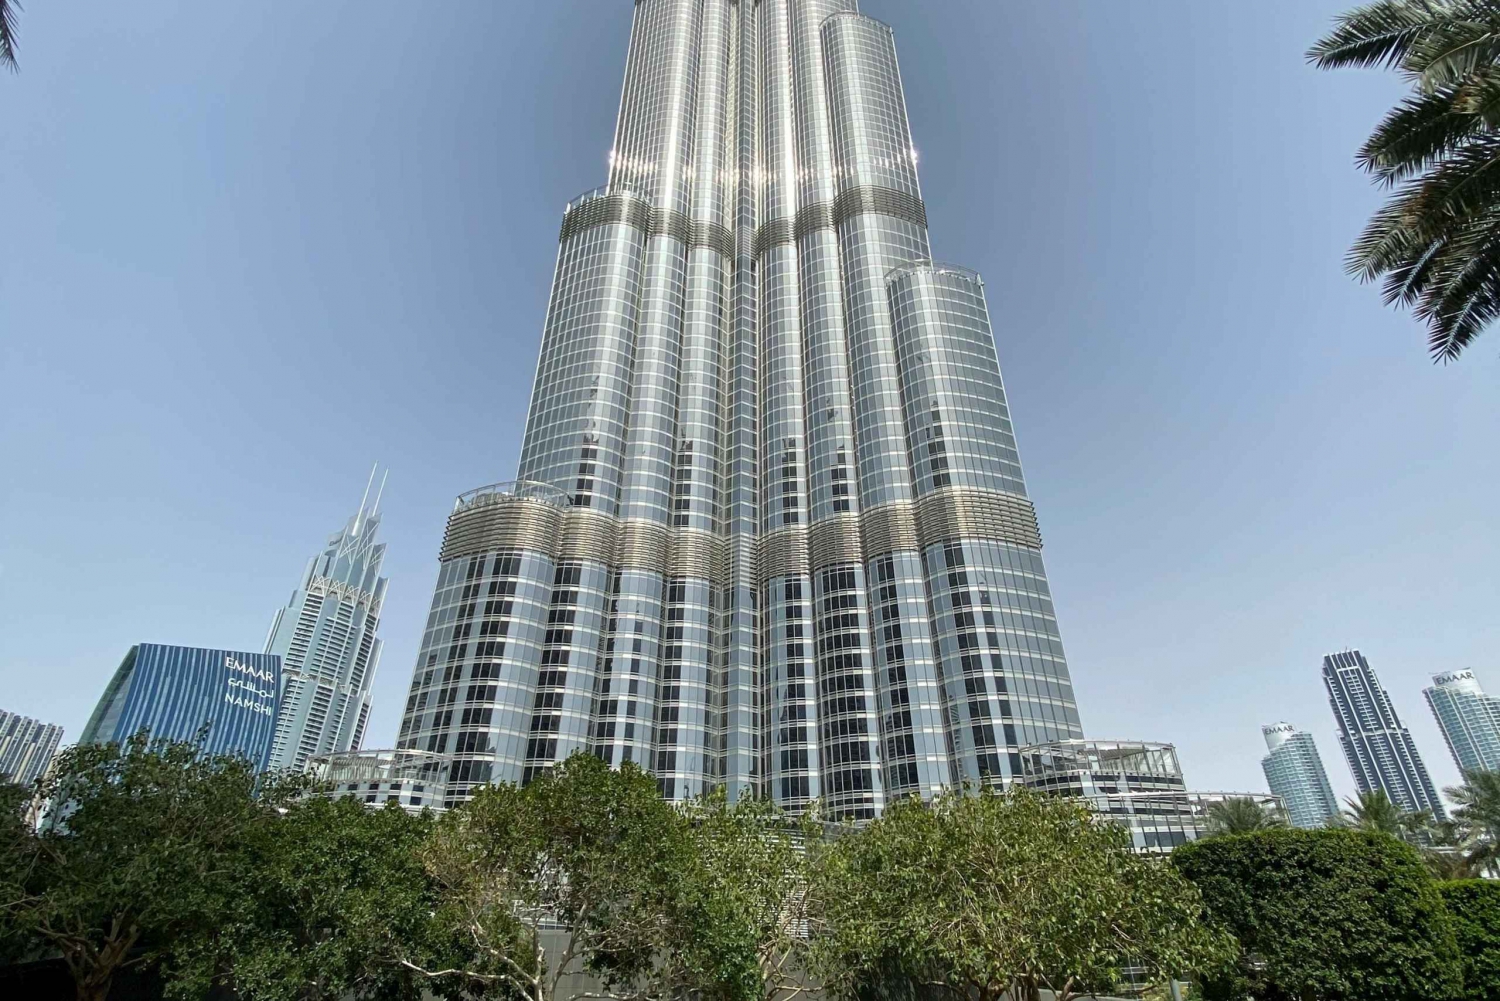 Dubai Sunset City Tour med Burj Khalifa och Armani-middag